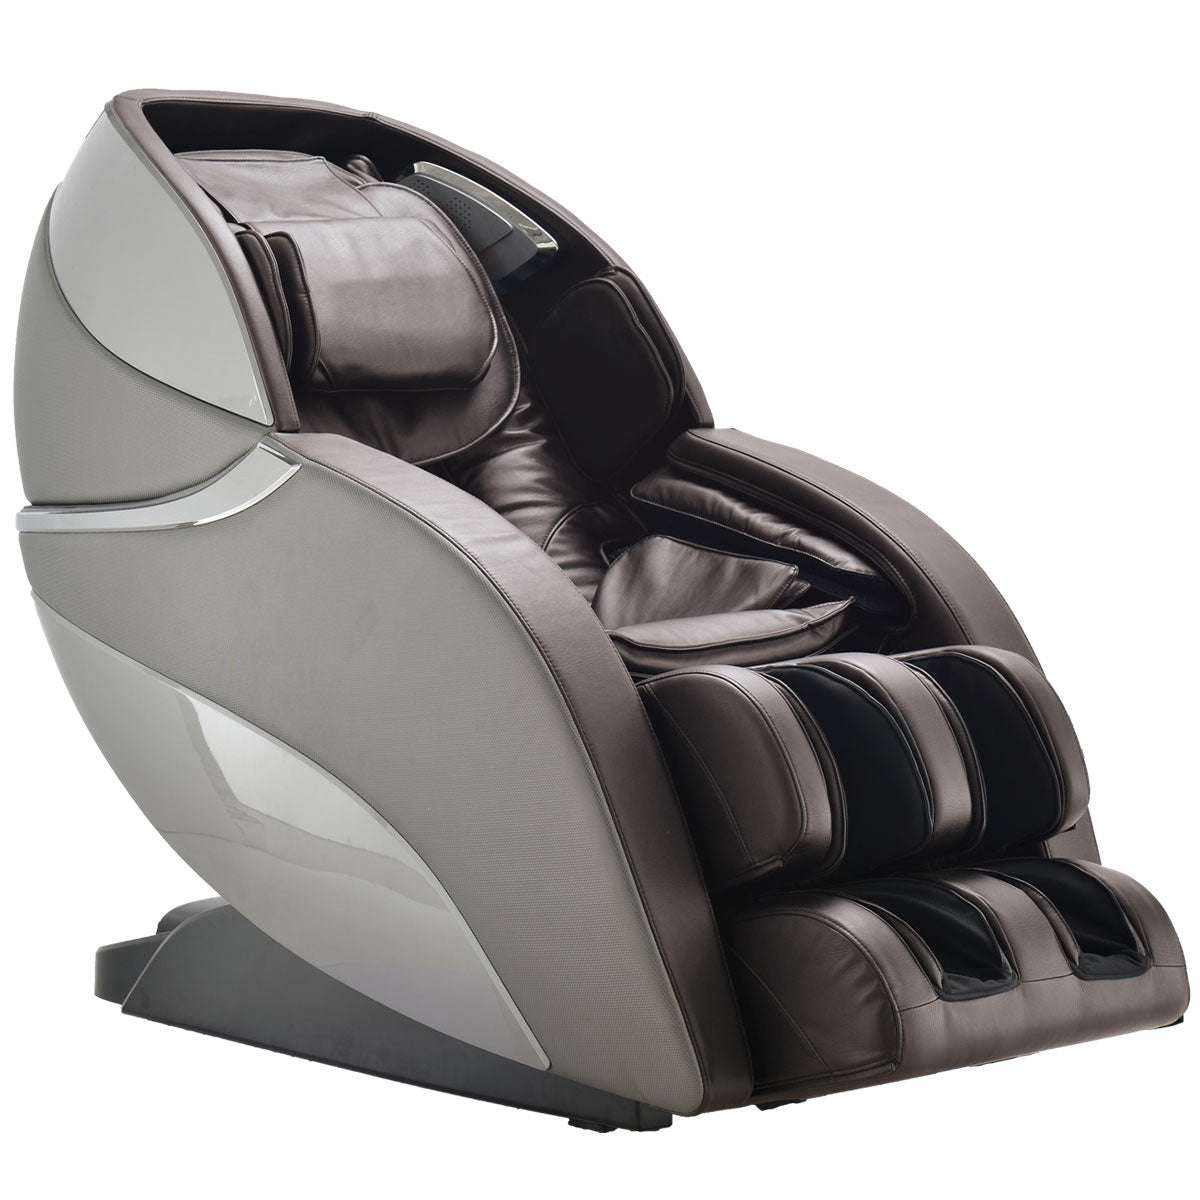 Infinity Genesis Massage Chair I MassageChairPlanet.Com